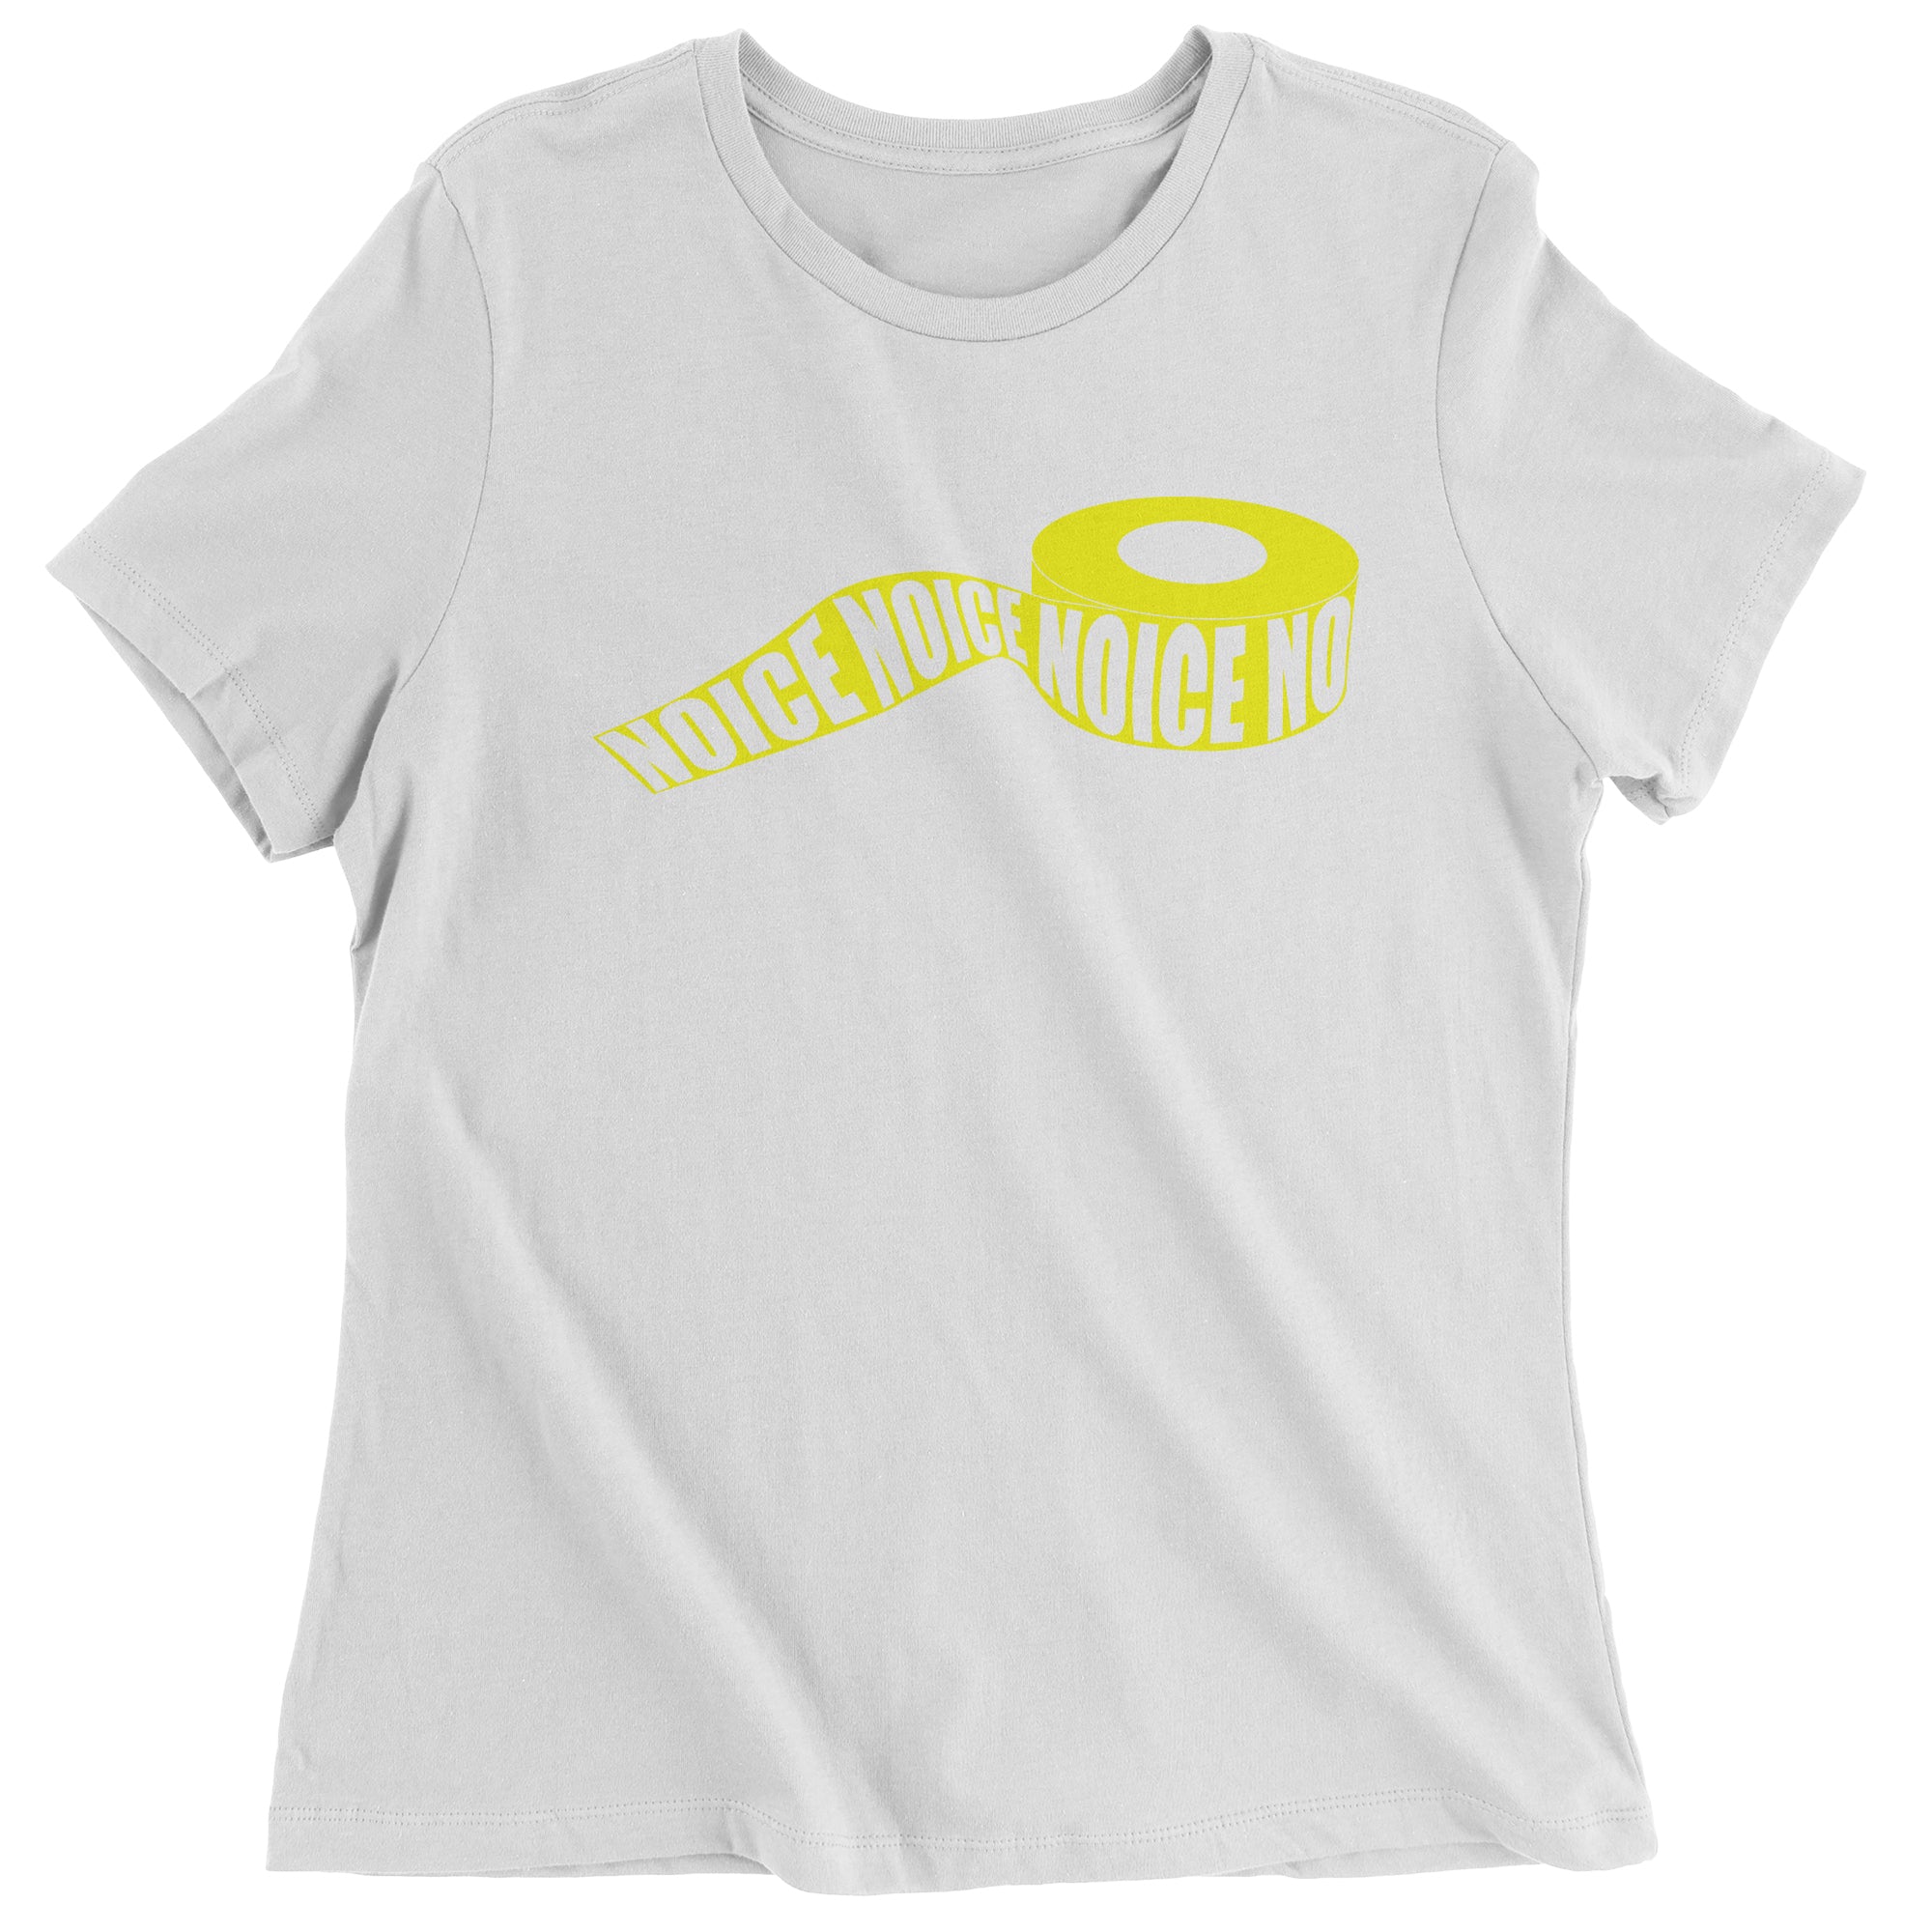 Noice Brooklyn 99 Women's T-Shirt